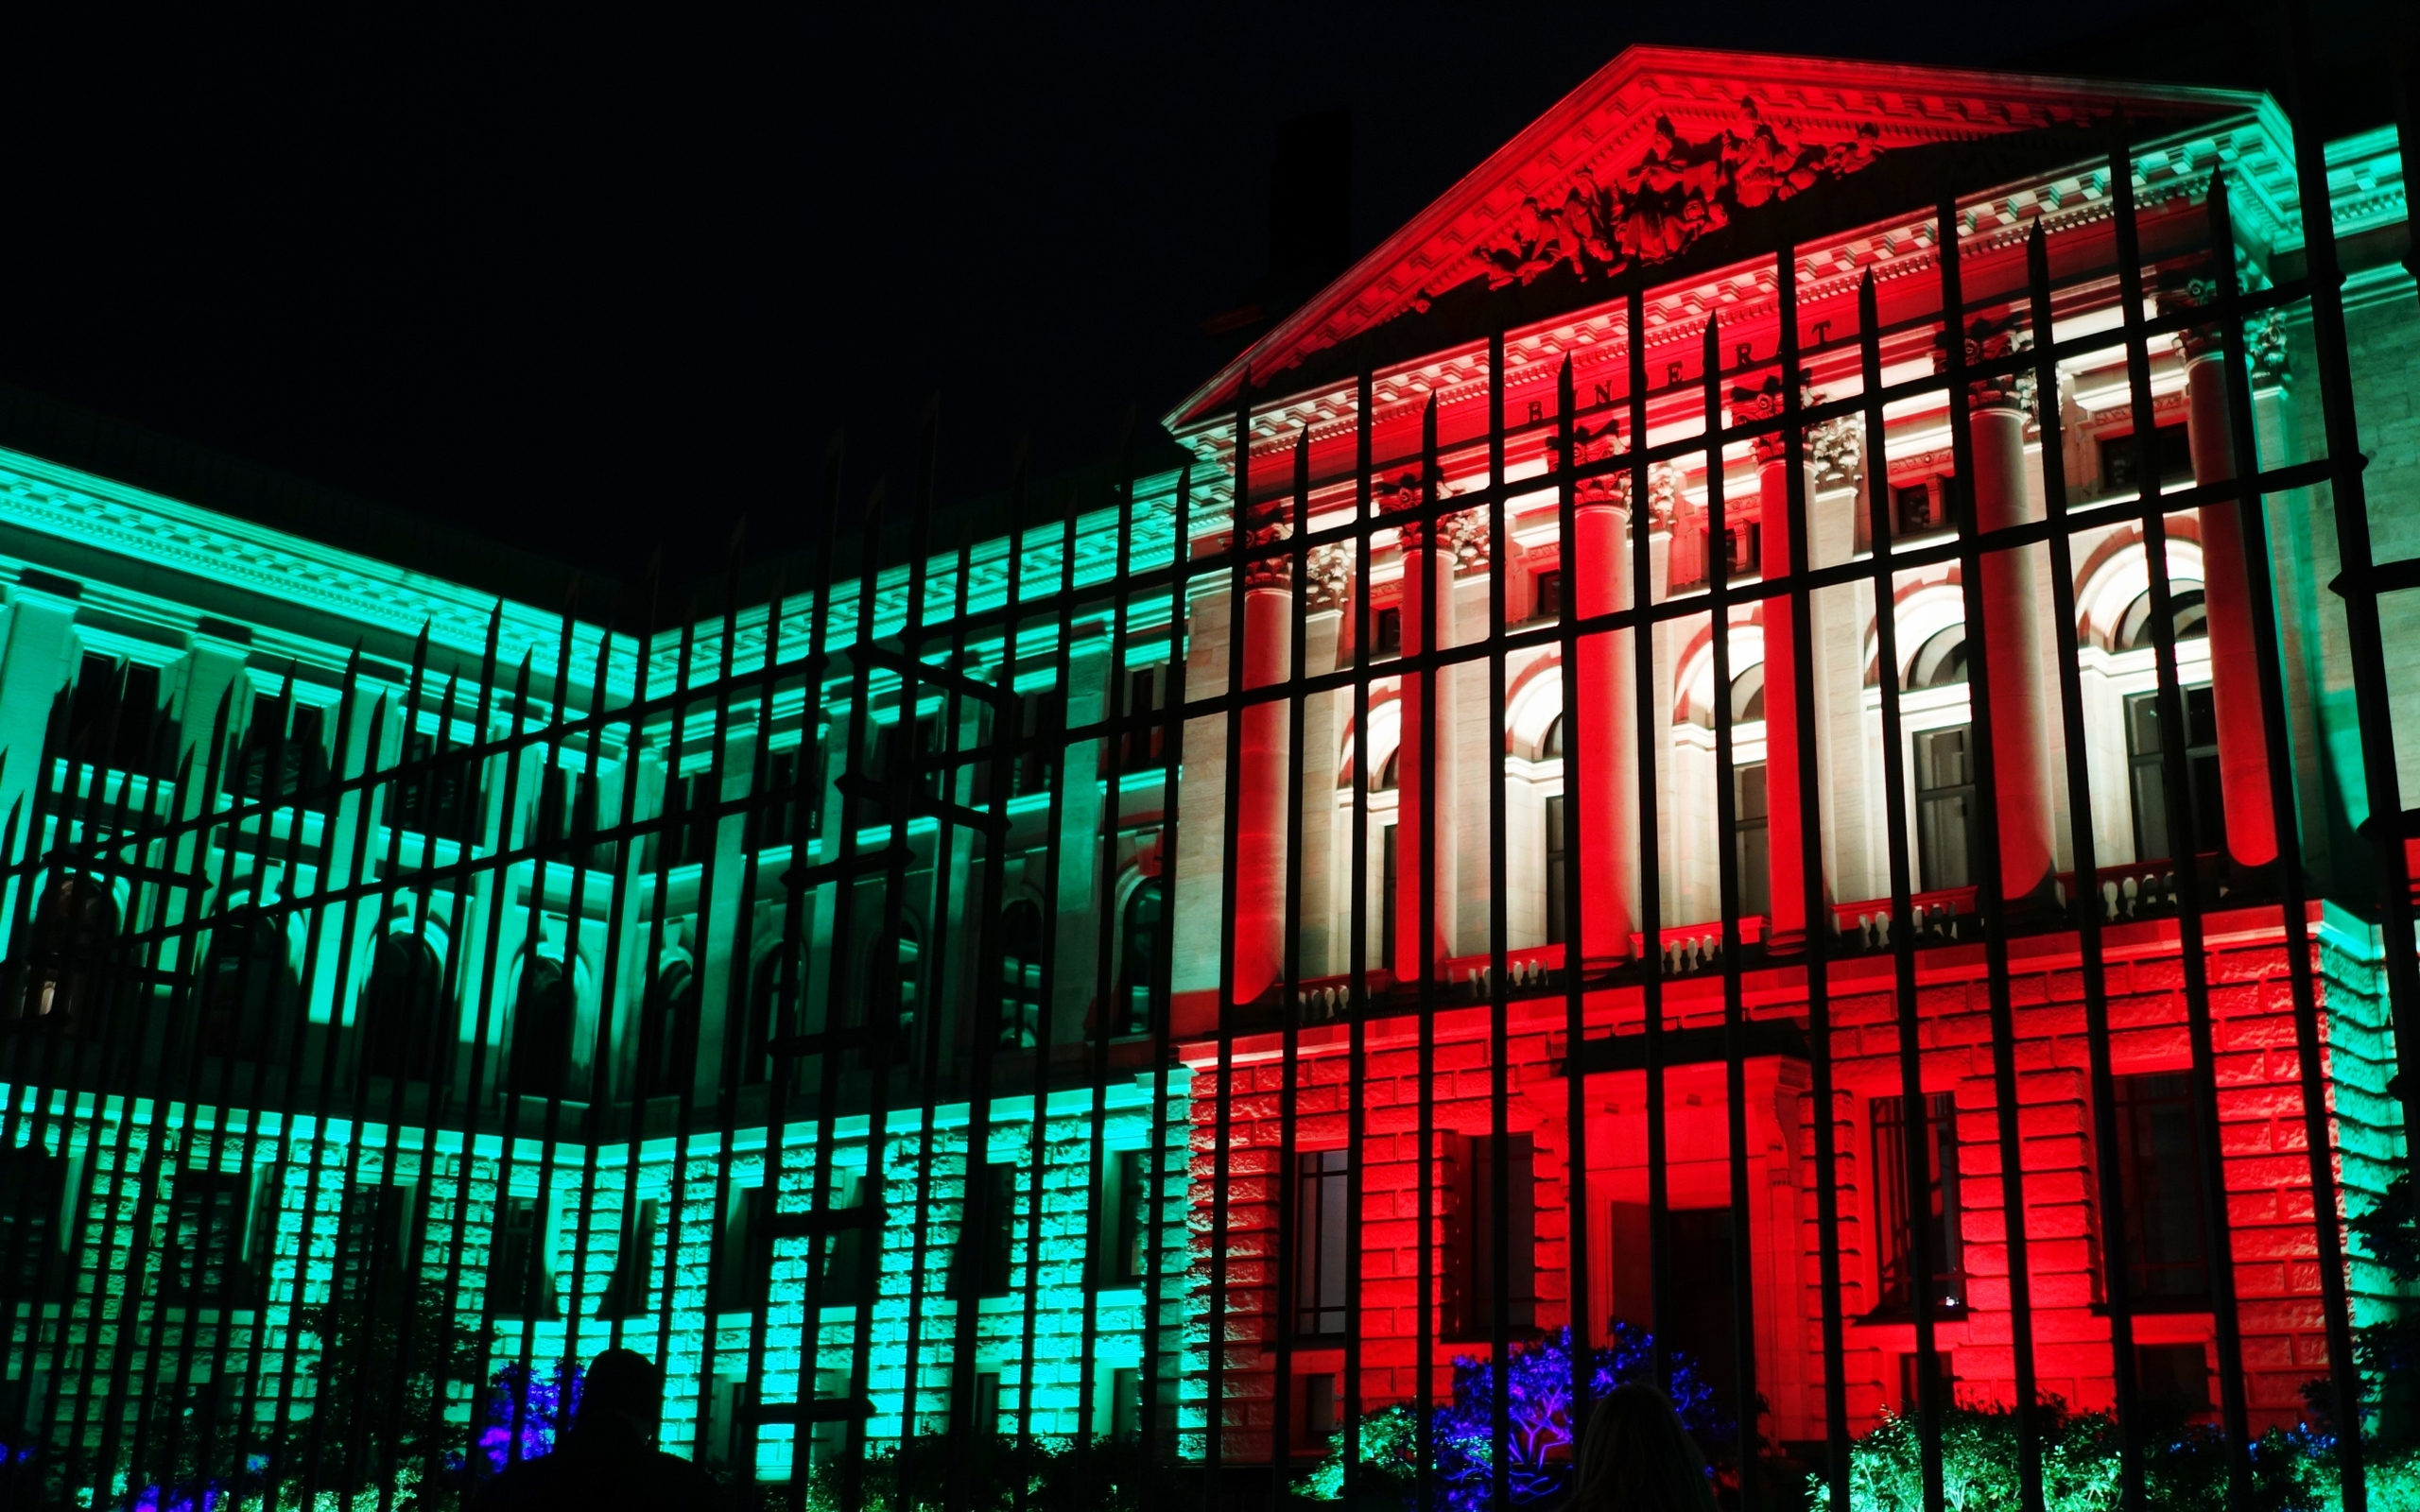 Artistic Festival Of Lights Berlin 2560x1600